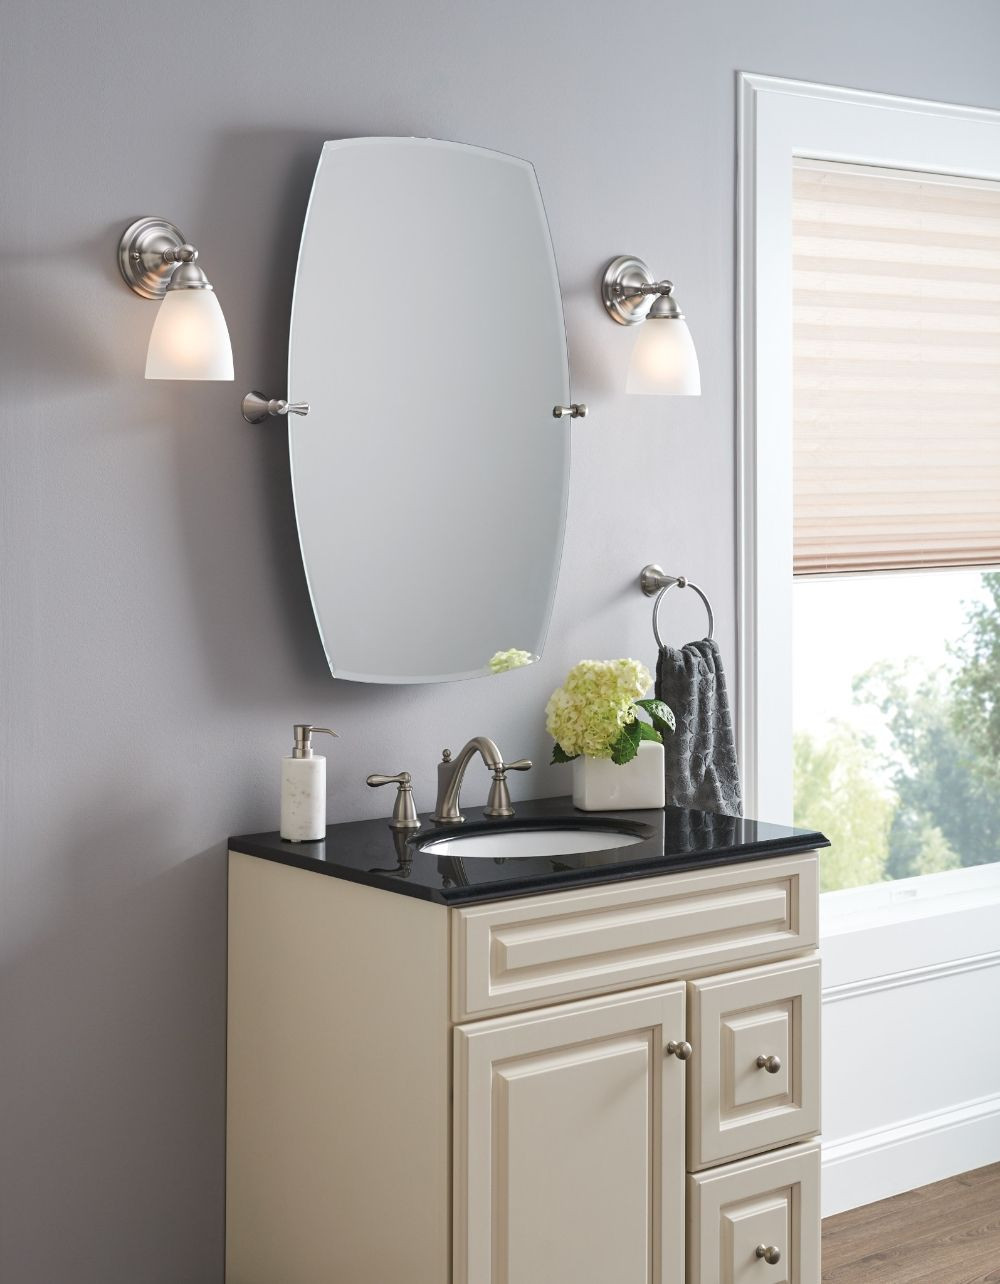 Polished Nickel Bathroom Mirror
 Rockcliff Brushed nickel mirror